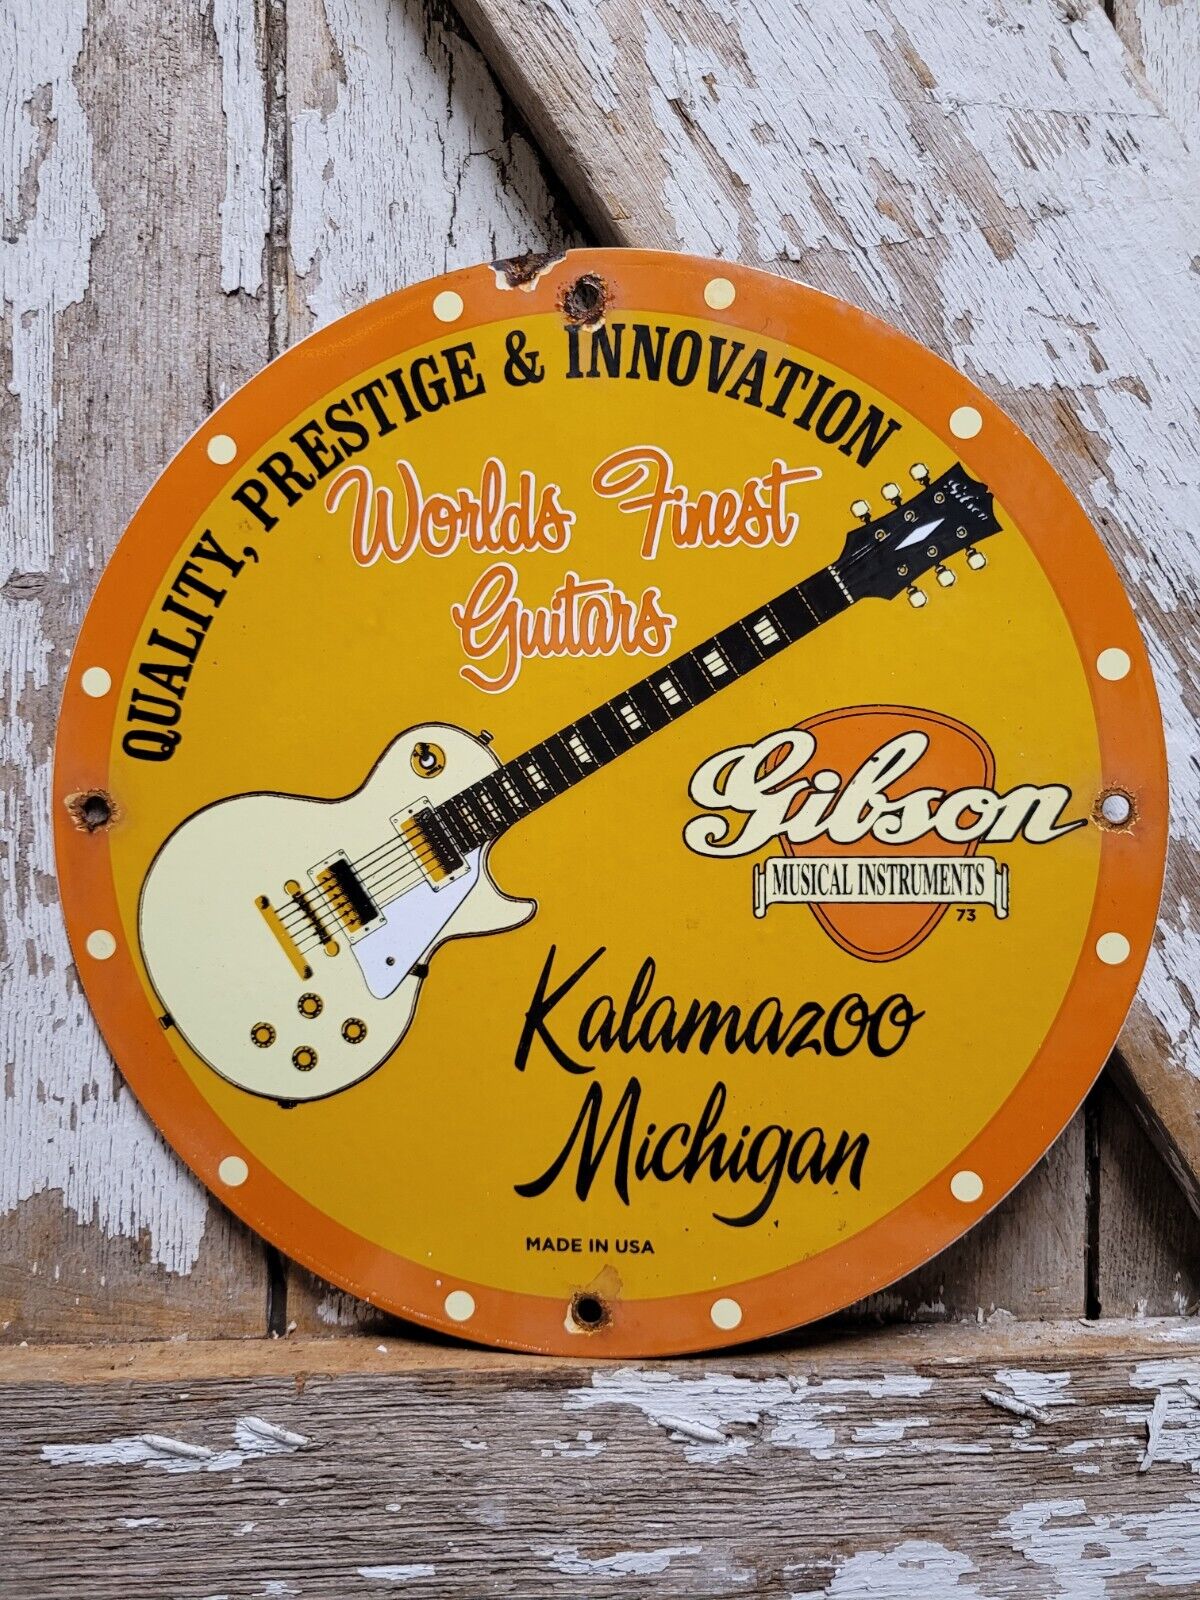 GIBSON VINTAGE PORCELAIN SIGN GUITAR MUSIC INSTRUMENT KALAMAZOO OIL GAS STATION